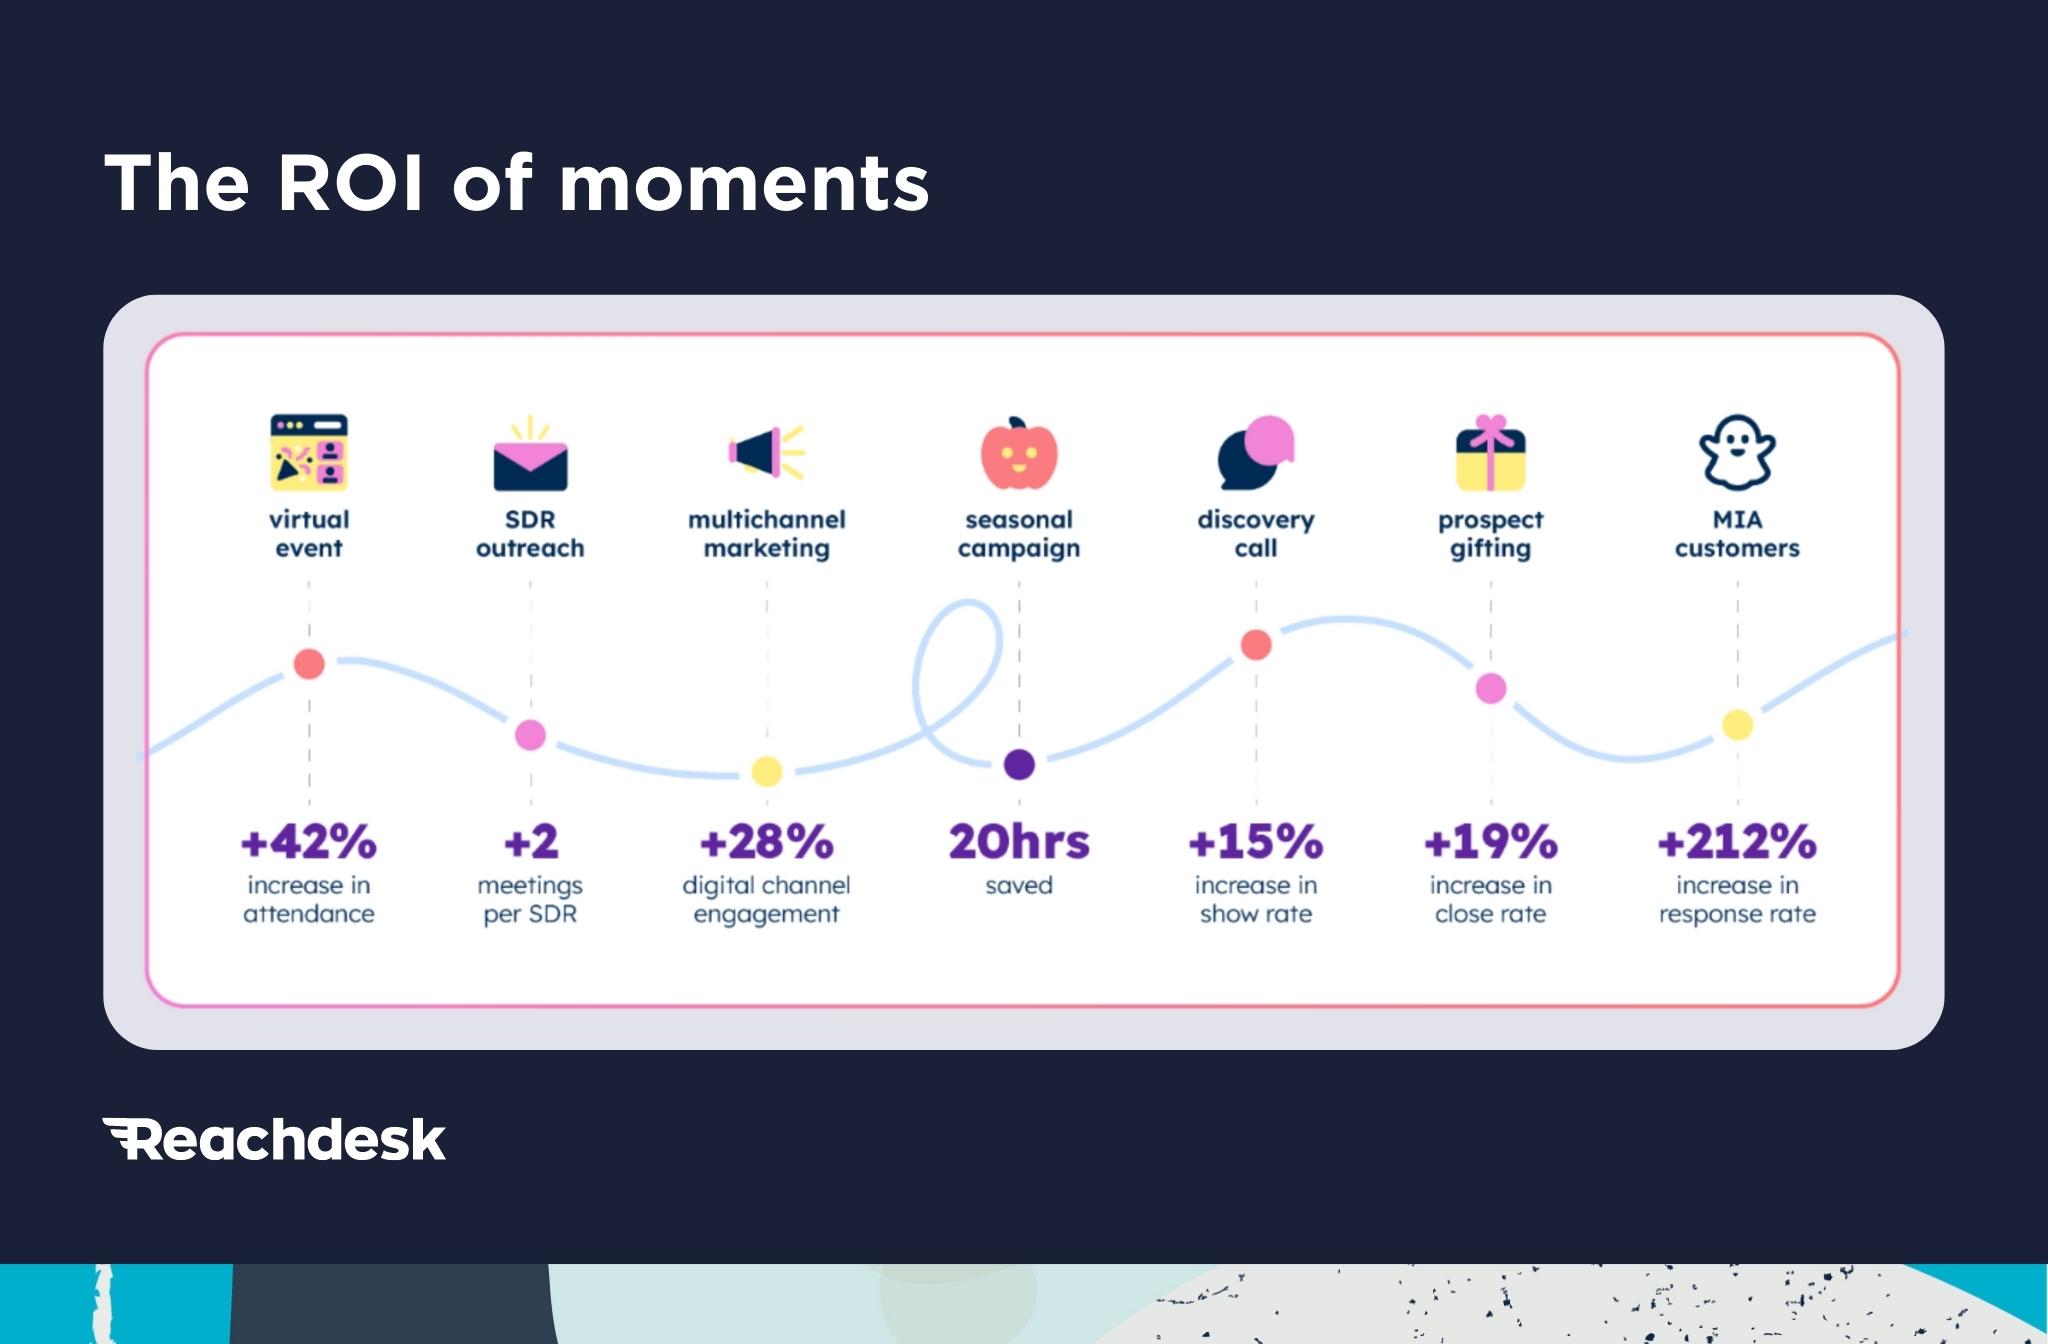 Reachdesk's ROI of moments graphic